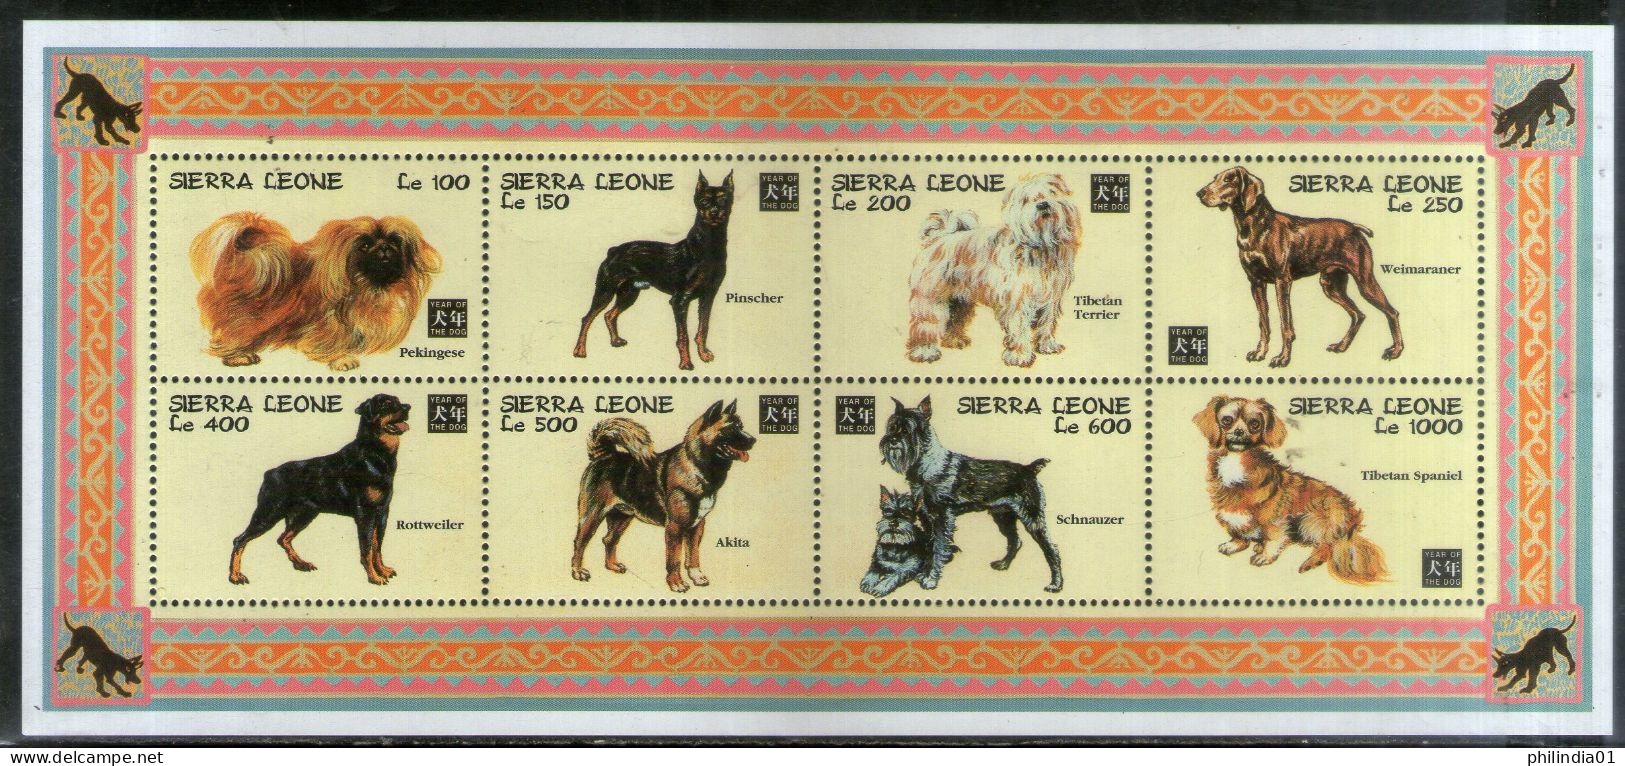 Sierra Leone 1994 Chinese New Year Dogs Animals Sc 1717 Sheetlet MNH # 6330 - Hunde